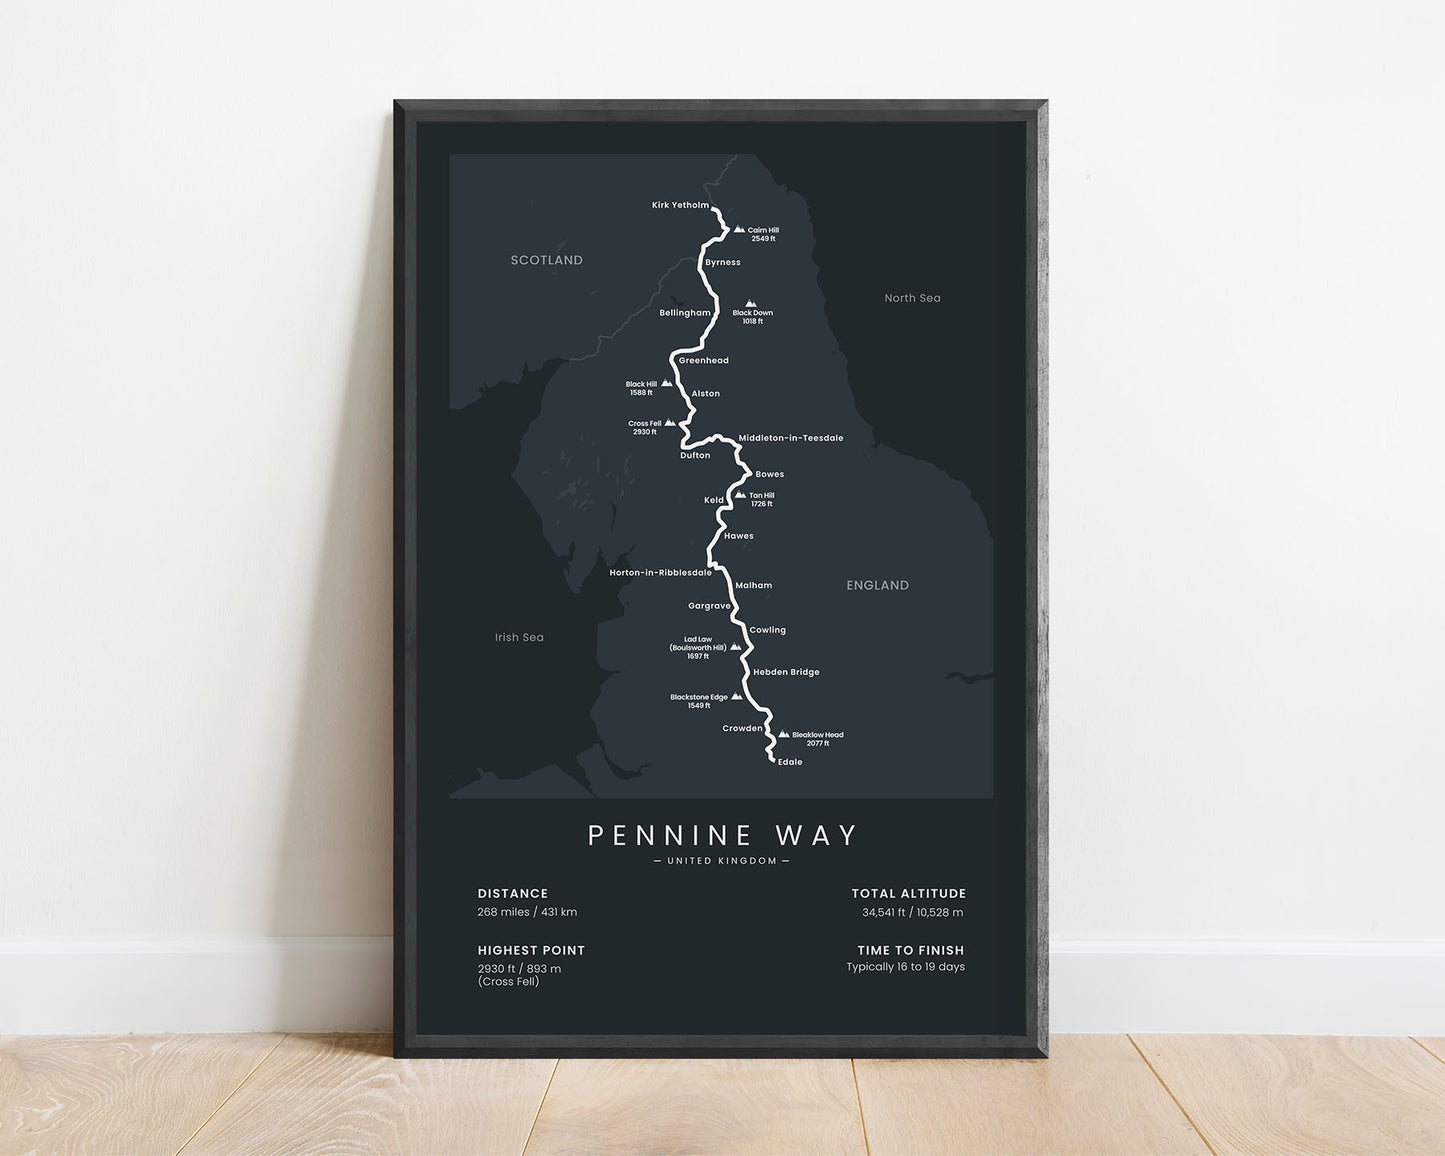 Pennine Way (Peak District) path print with black background